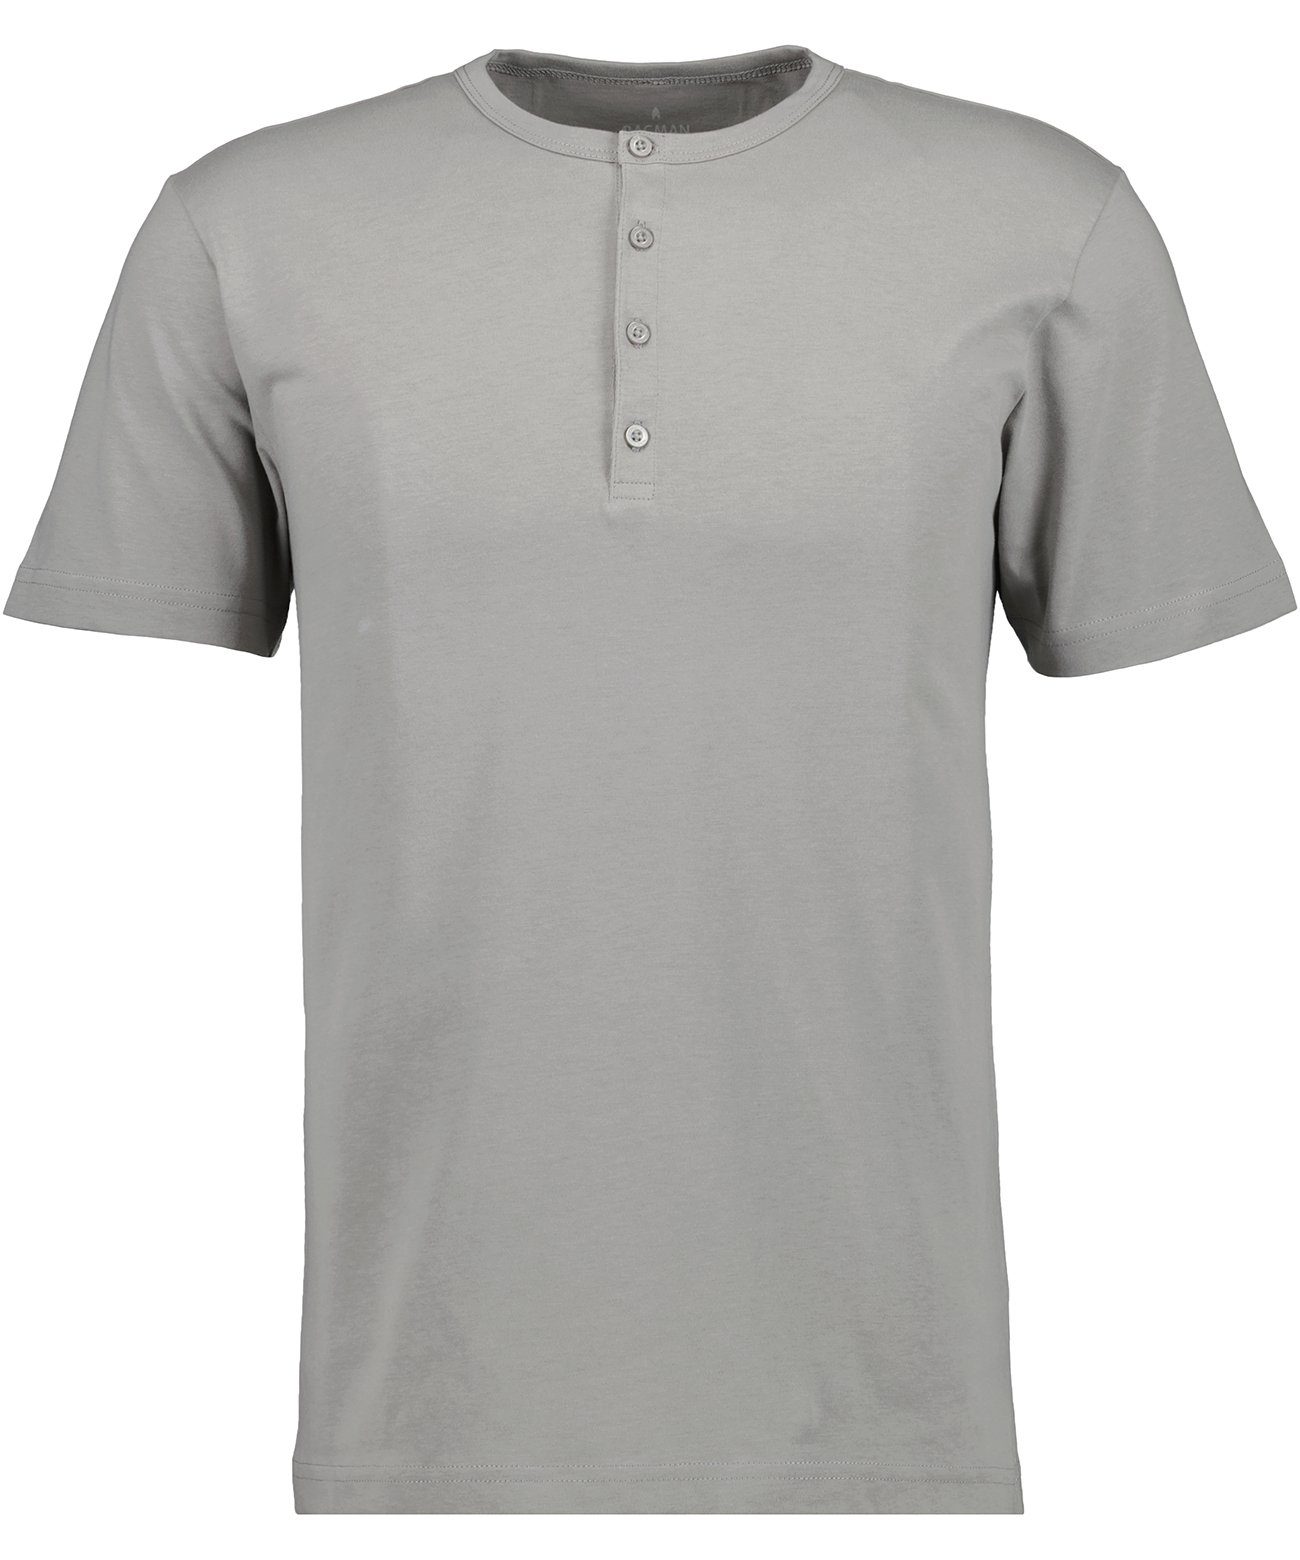 RAGMAN Longshirt Grau-Beige-215 | T-Shirts